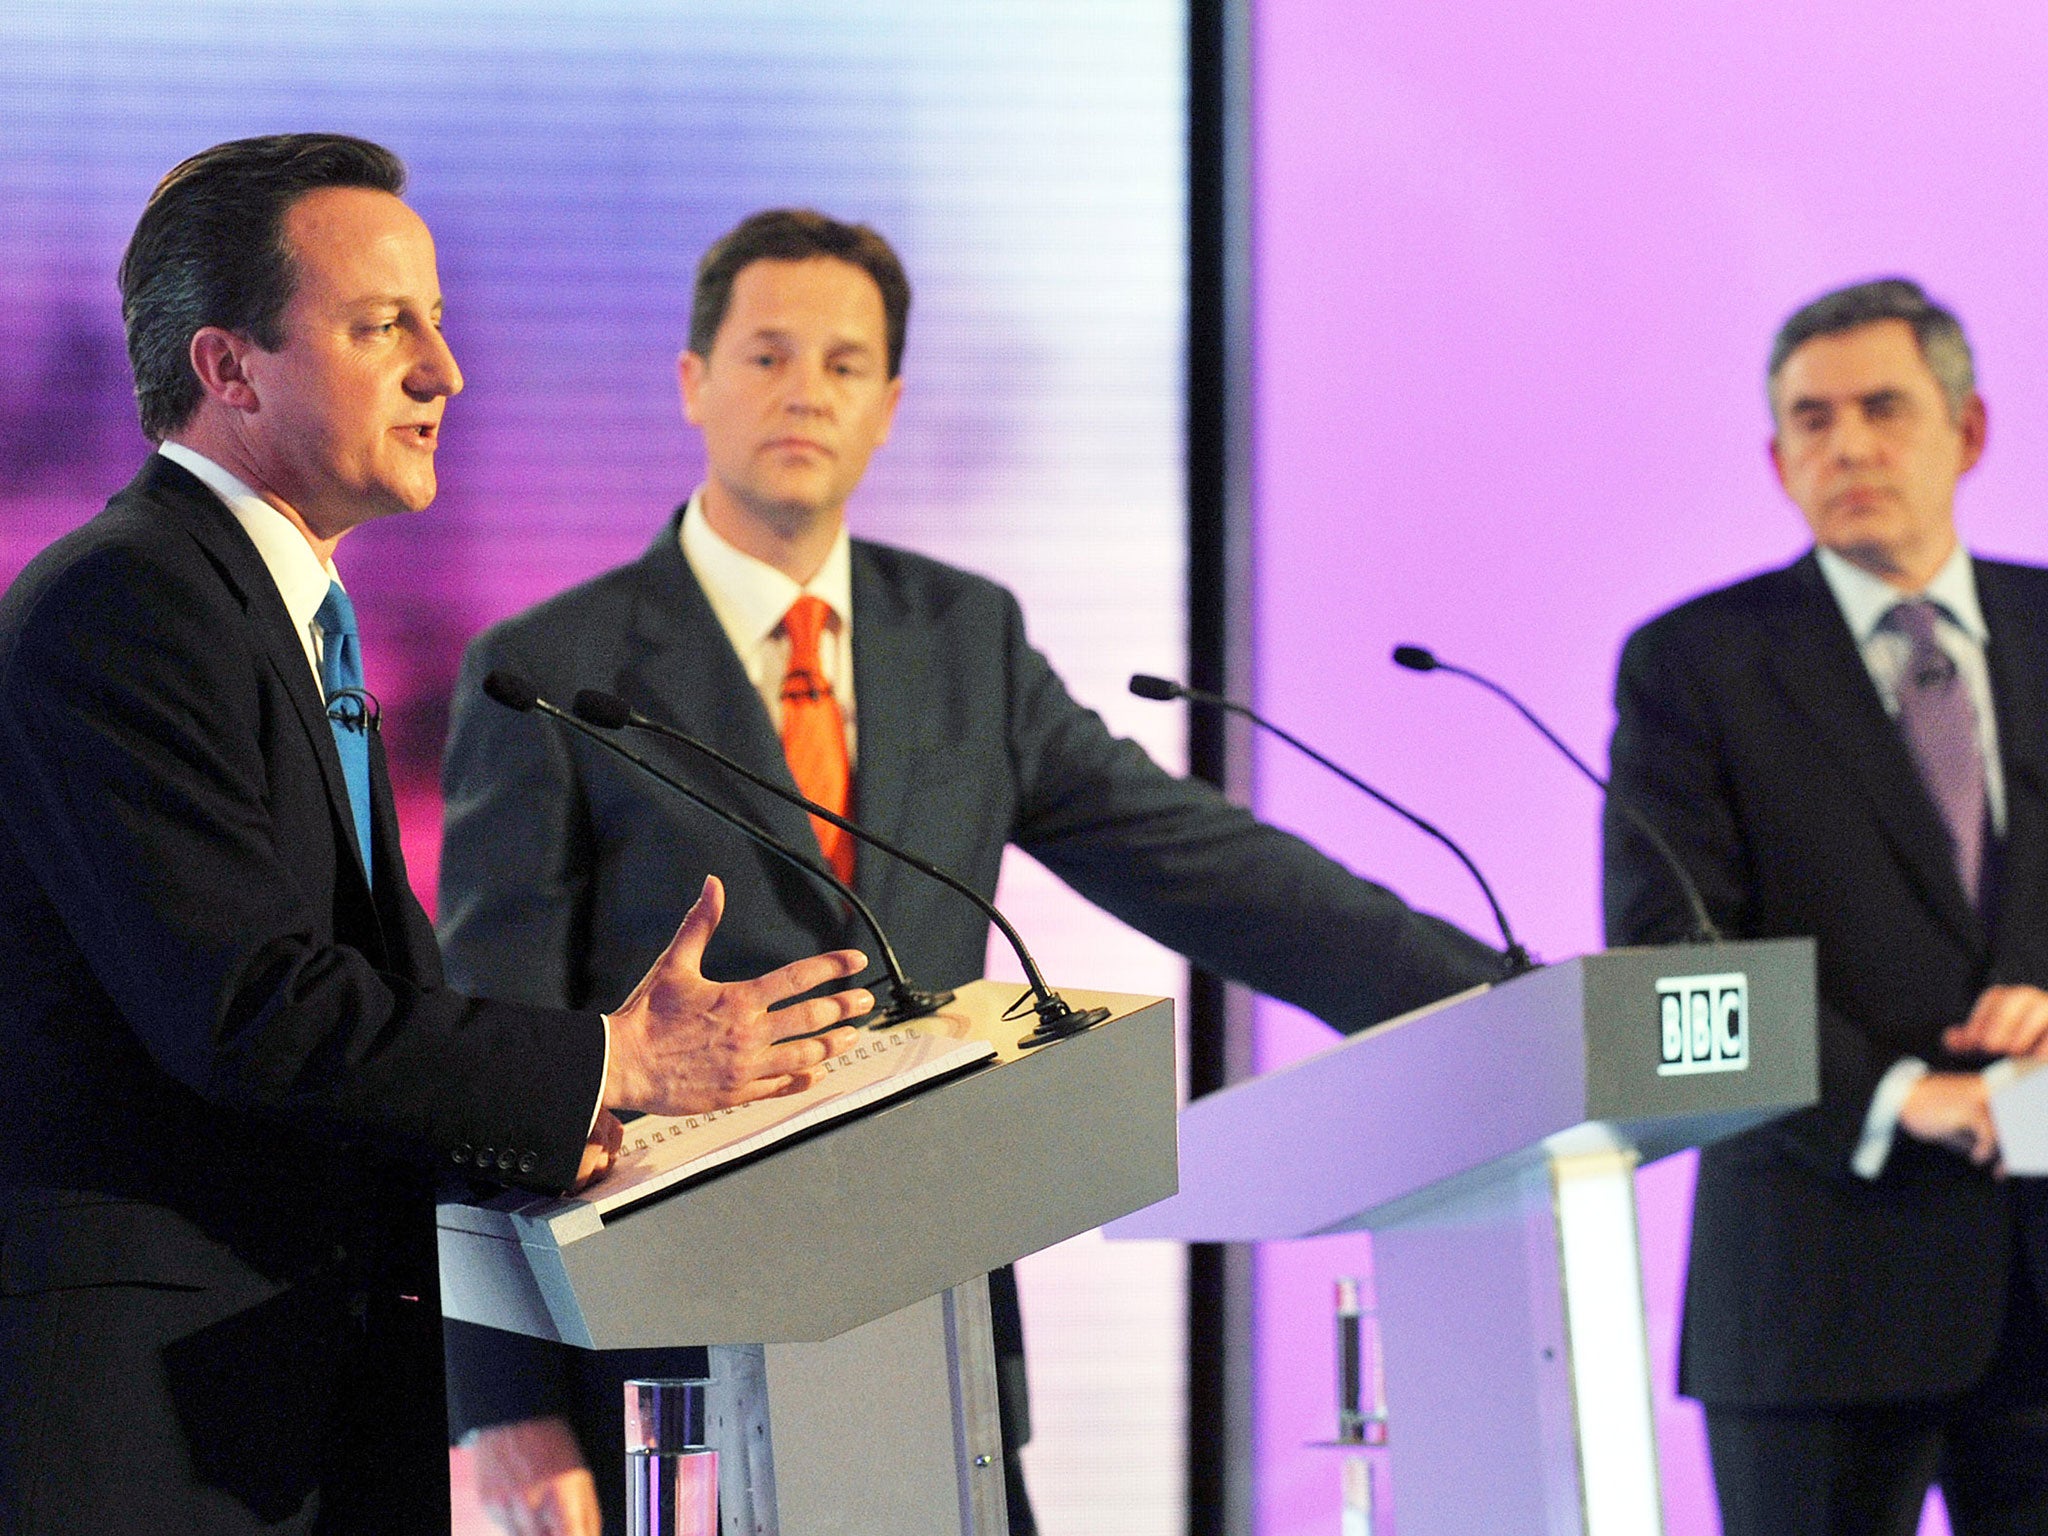 David Cameron, Nick Clegg and Gordon Brown during the BBC TV Debate in 2010